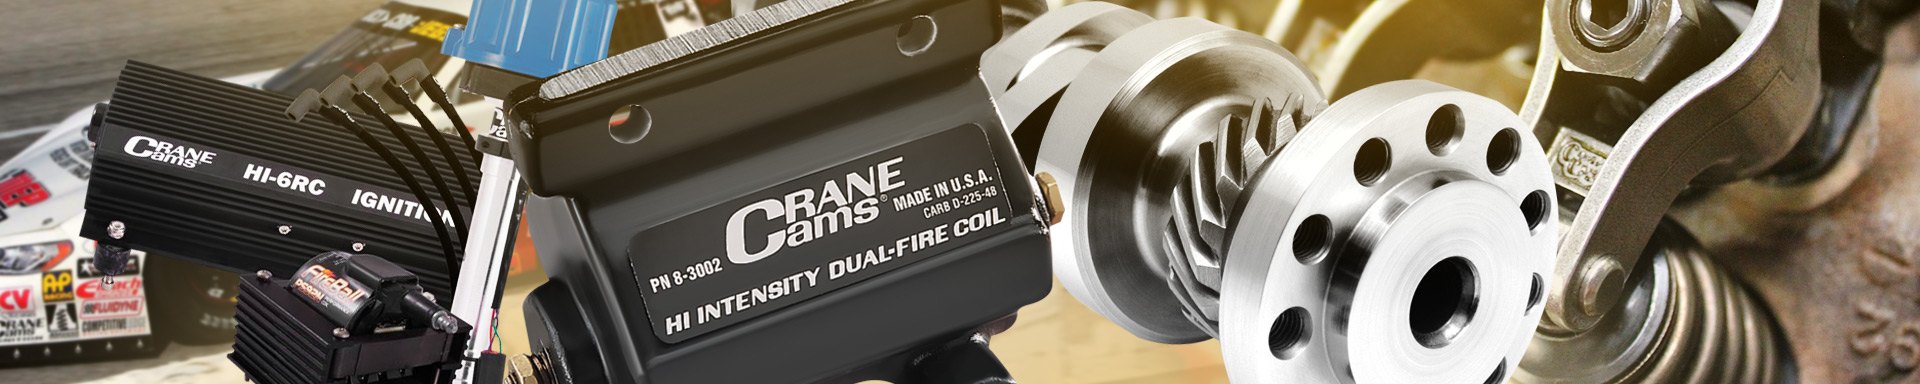 Crane Cams Racing Engines & Components